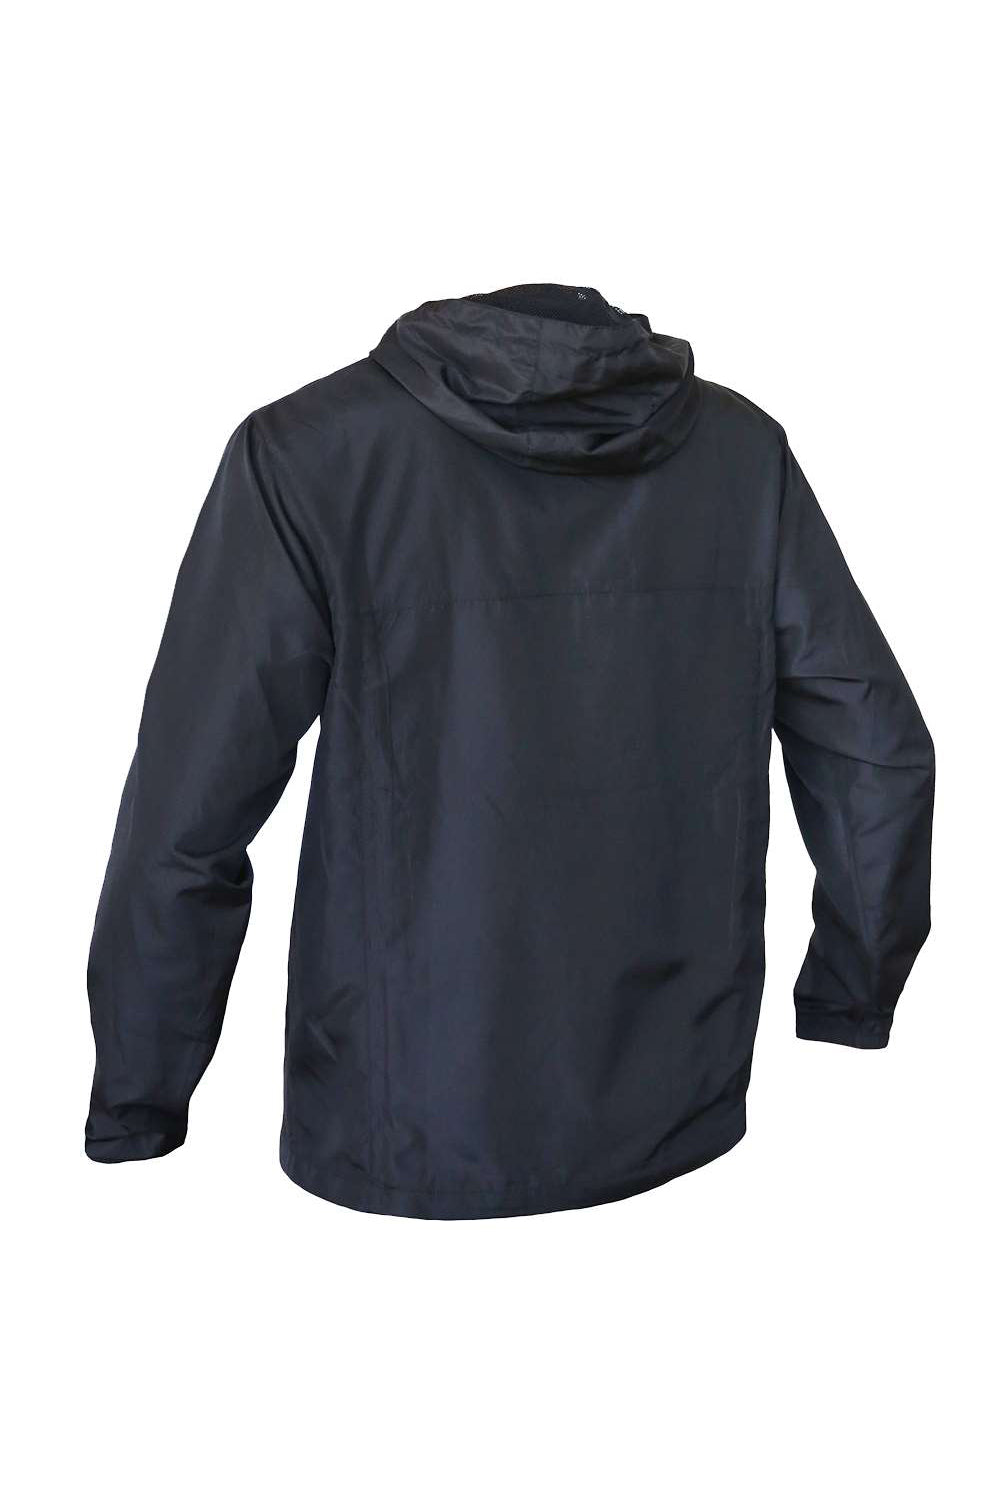 Quikflip AWB Mens 2-in-1 Dryflip Full Zip Hooded Windbreaker Jacket Black Flat Back